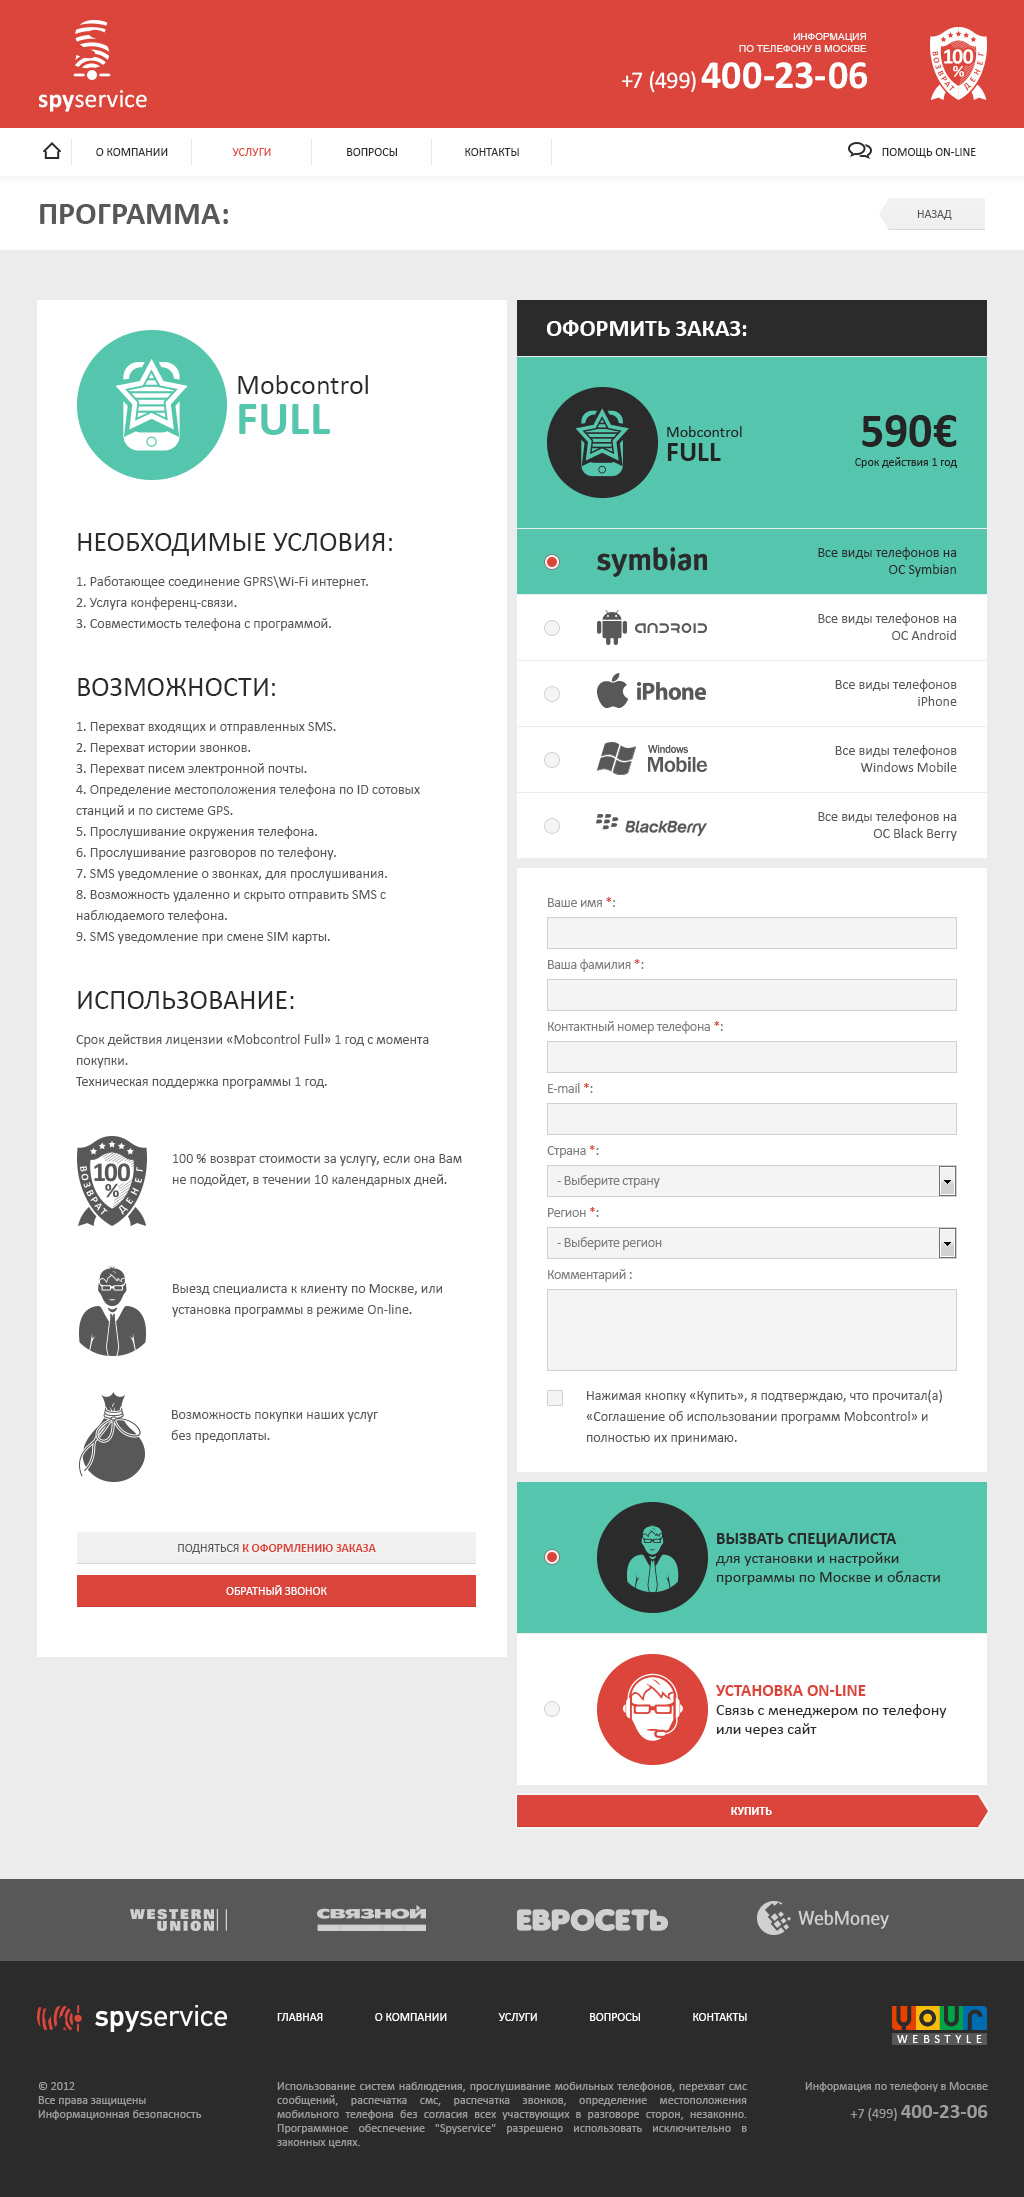 spy service Web design content app mobile logo brend spyservice shop software site